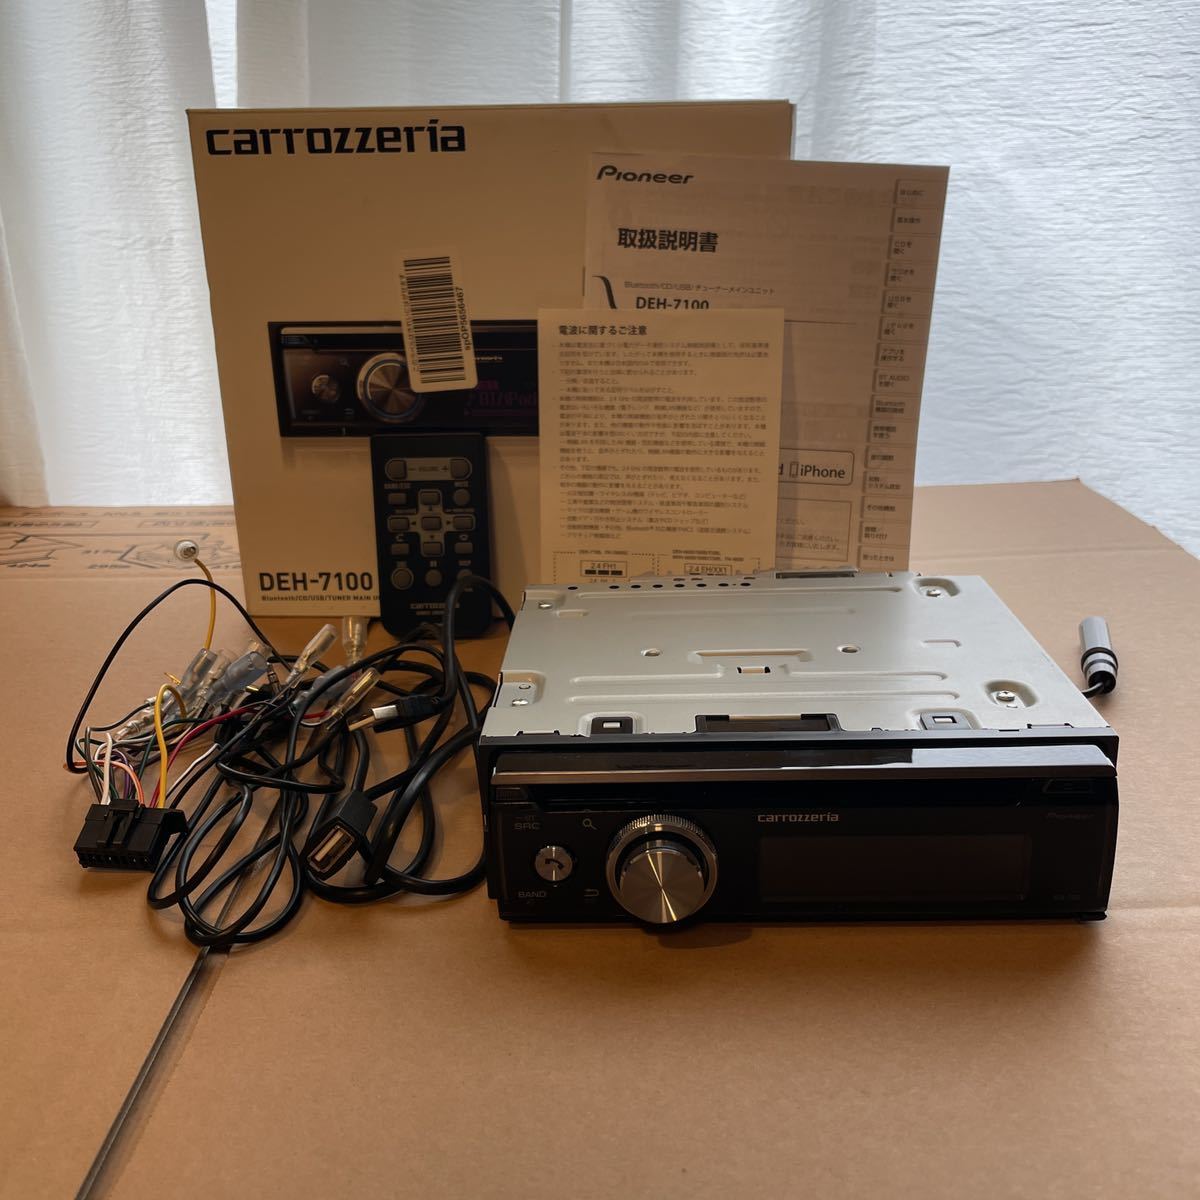 carrozzeria Pioneer カロッツェリア パイオニア DEH-7100 1DIN Bluetooth USB CD 使用期間4ヶ月 オーディオ  1DIN(カロッツェリア)｜売買されたオークション情報、yahooの商品情報をアーカイブ公開 - オークファン（aucfan.com）